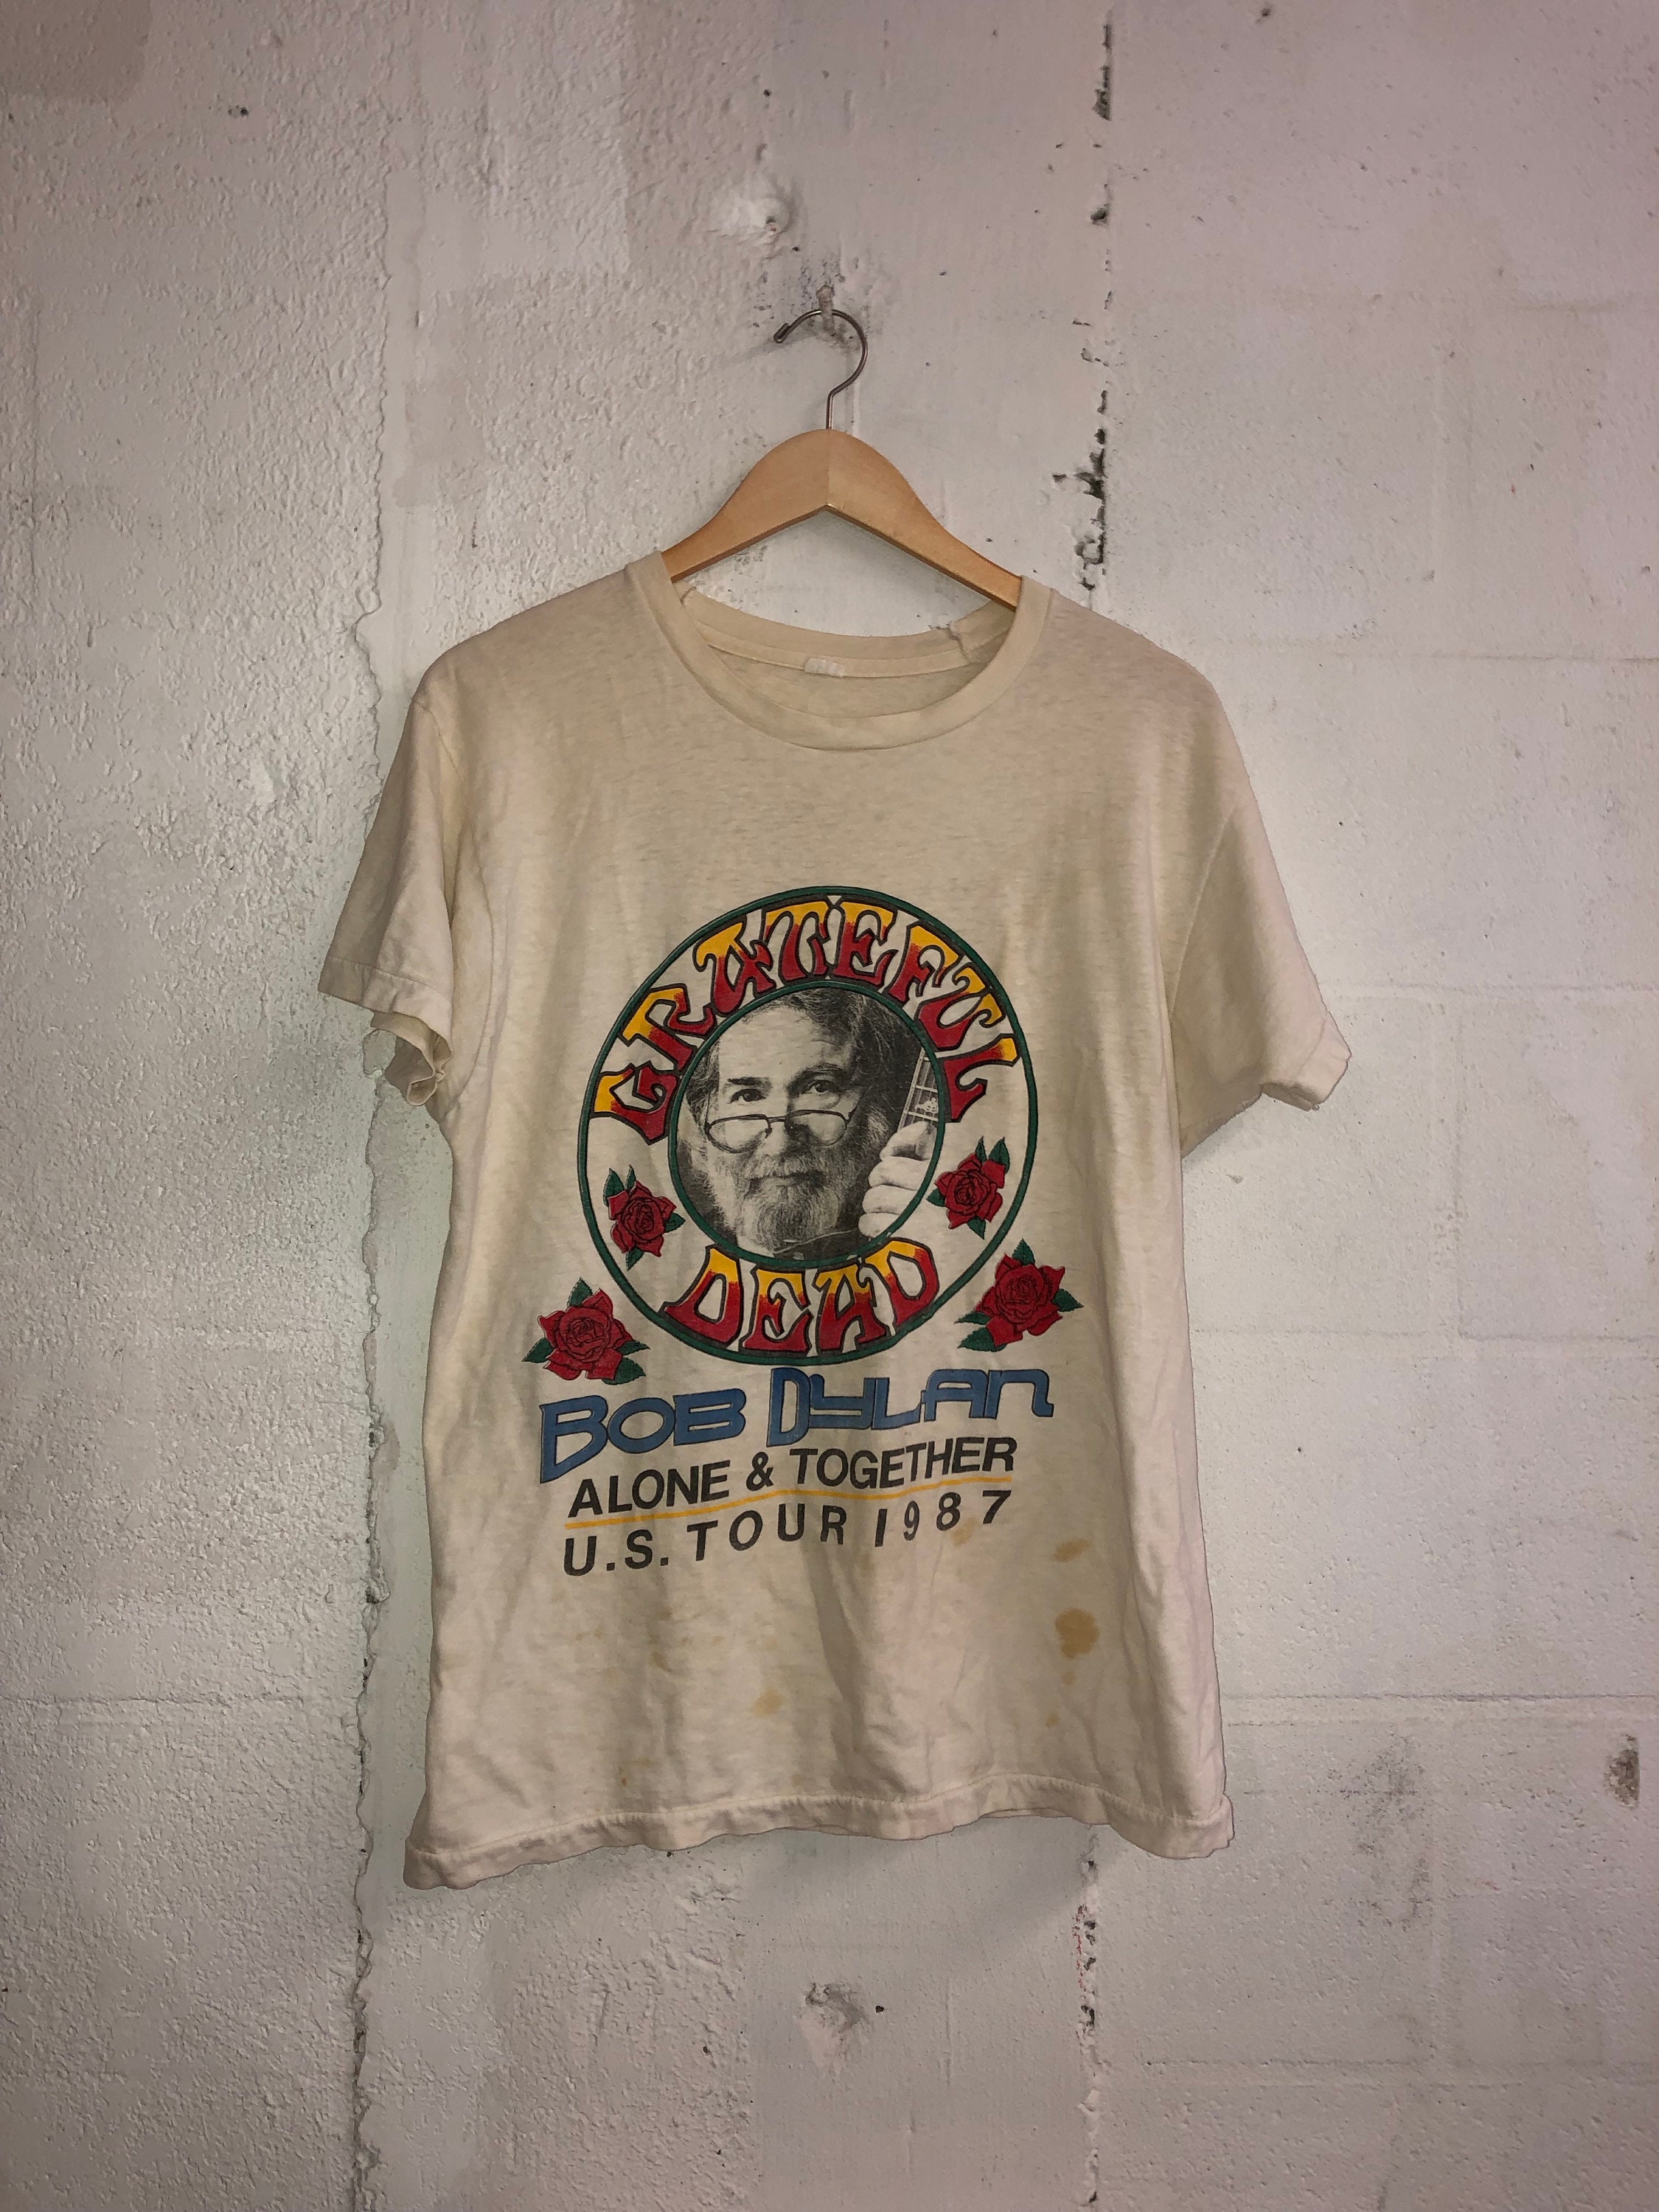 Vintage 80's Grateful Dead and Bob Dylan Tour T-shirt. Cool